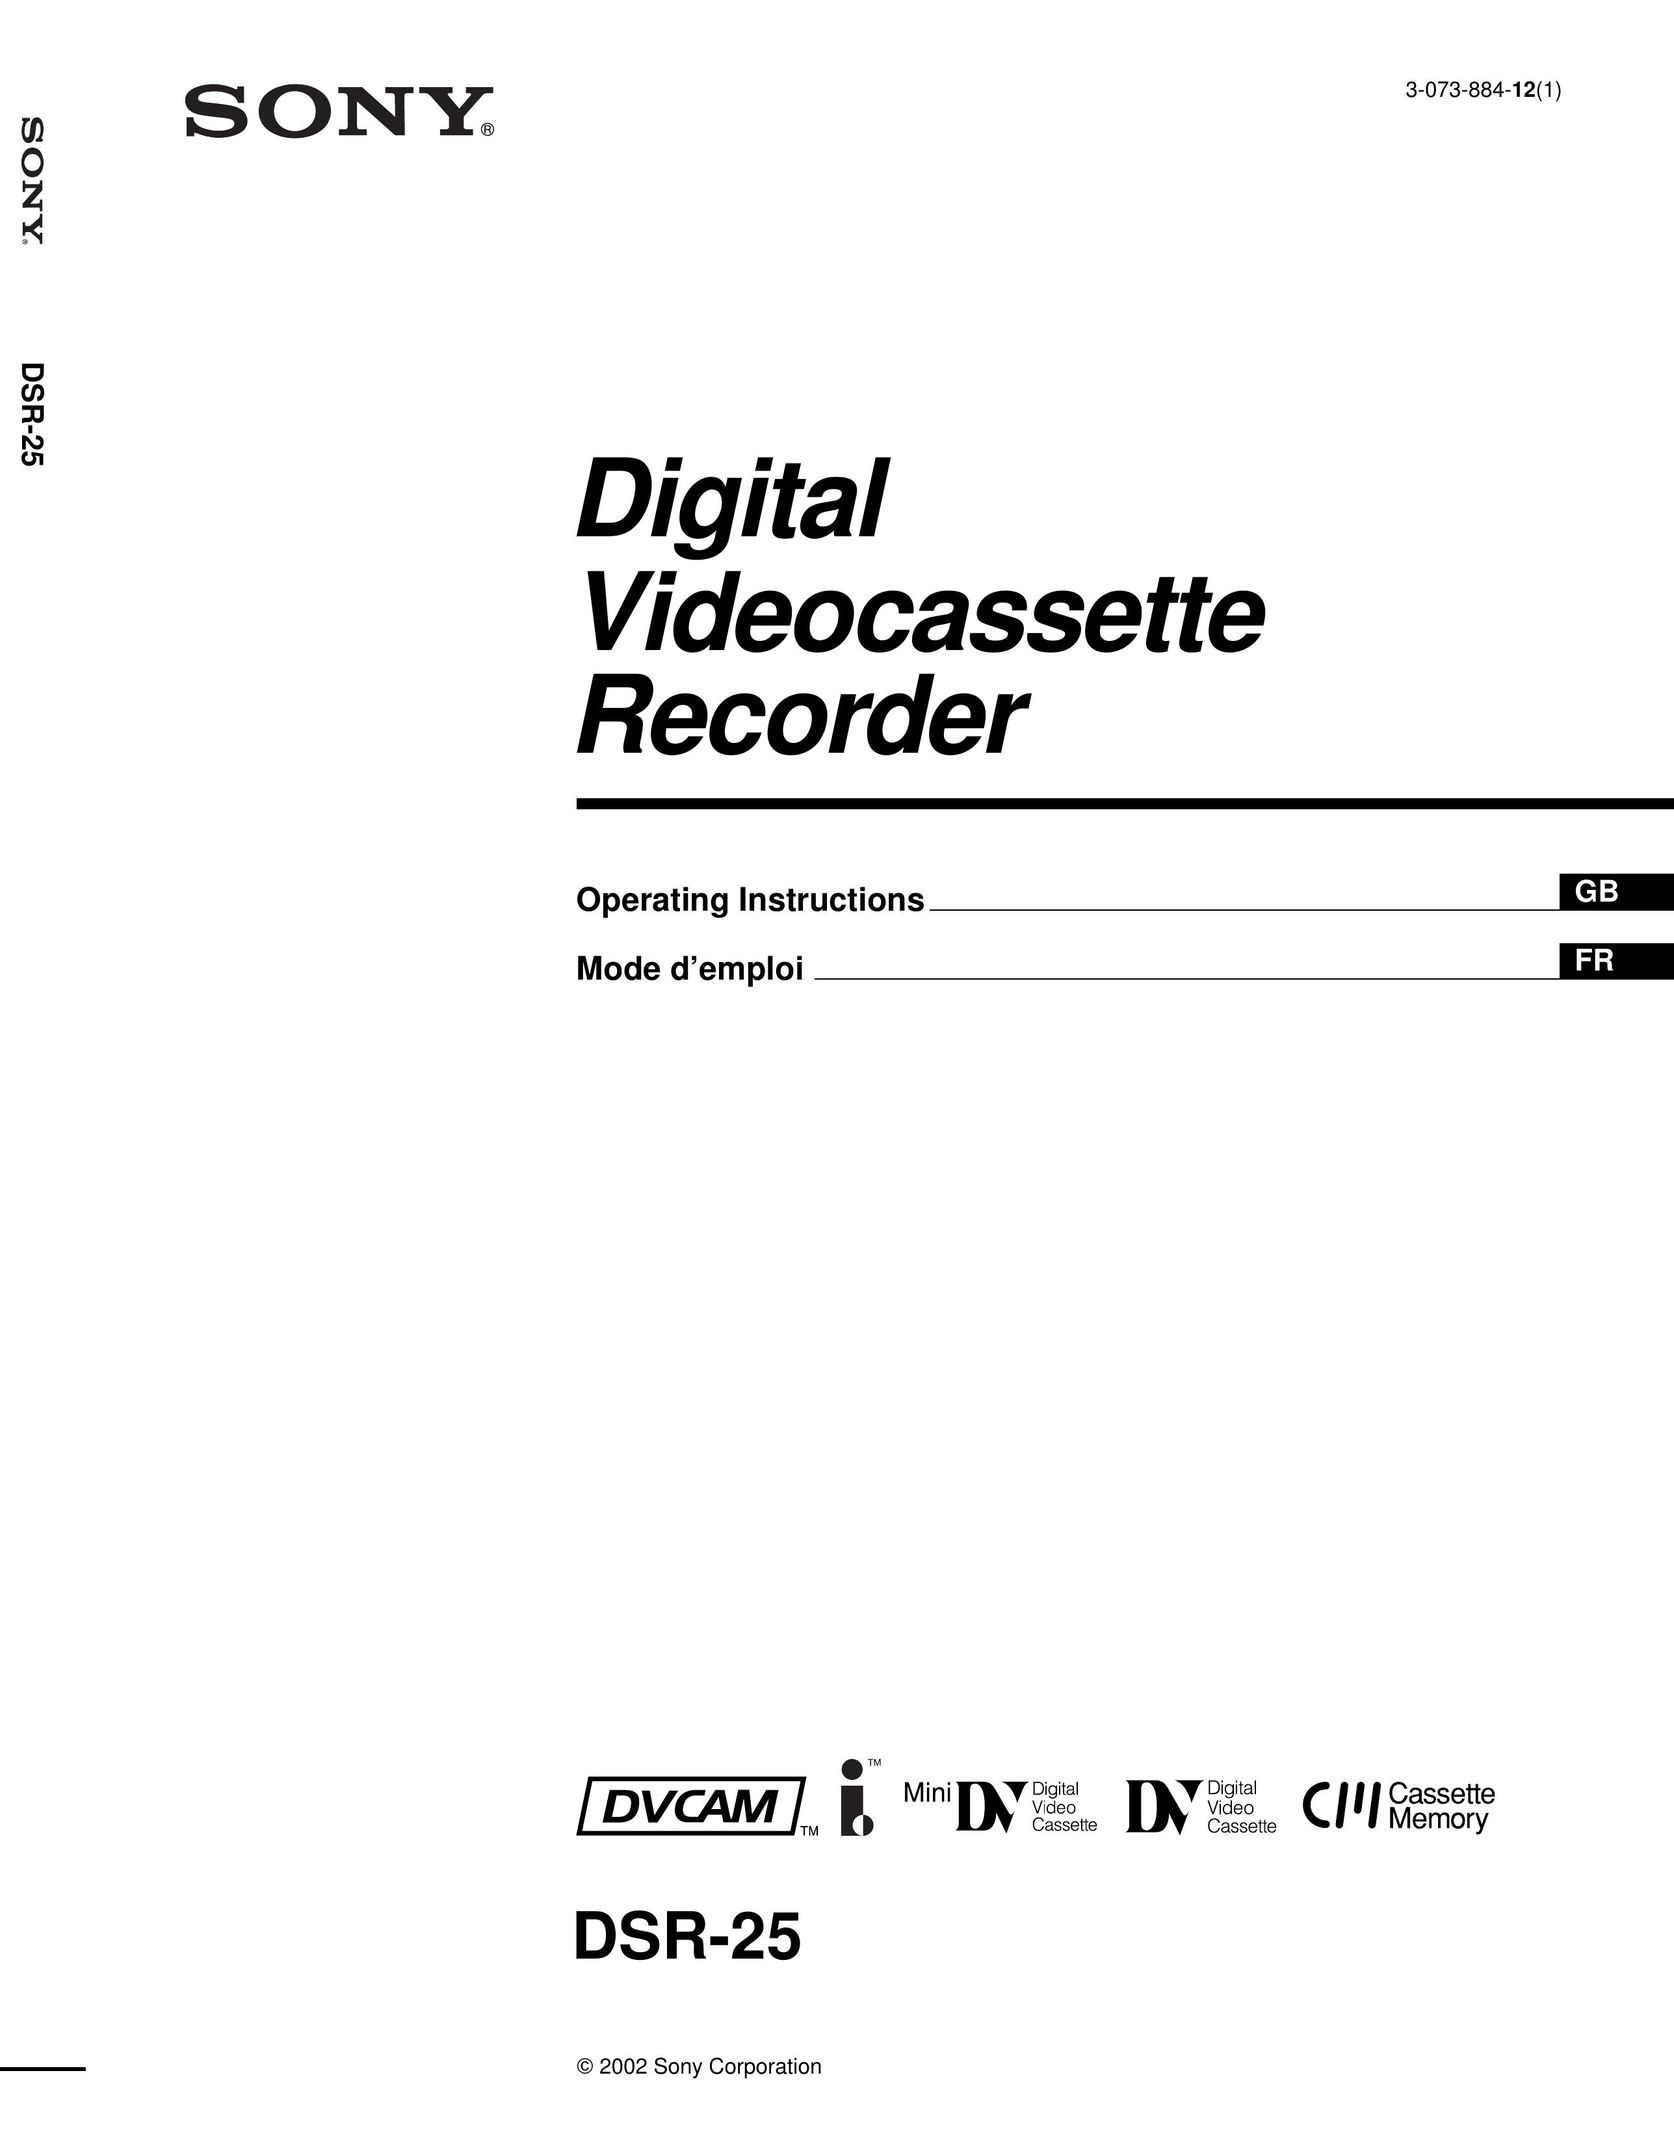 Sony DSR-25 VCR User Manual